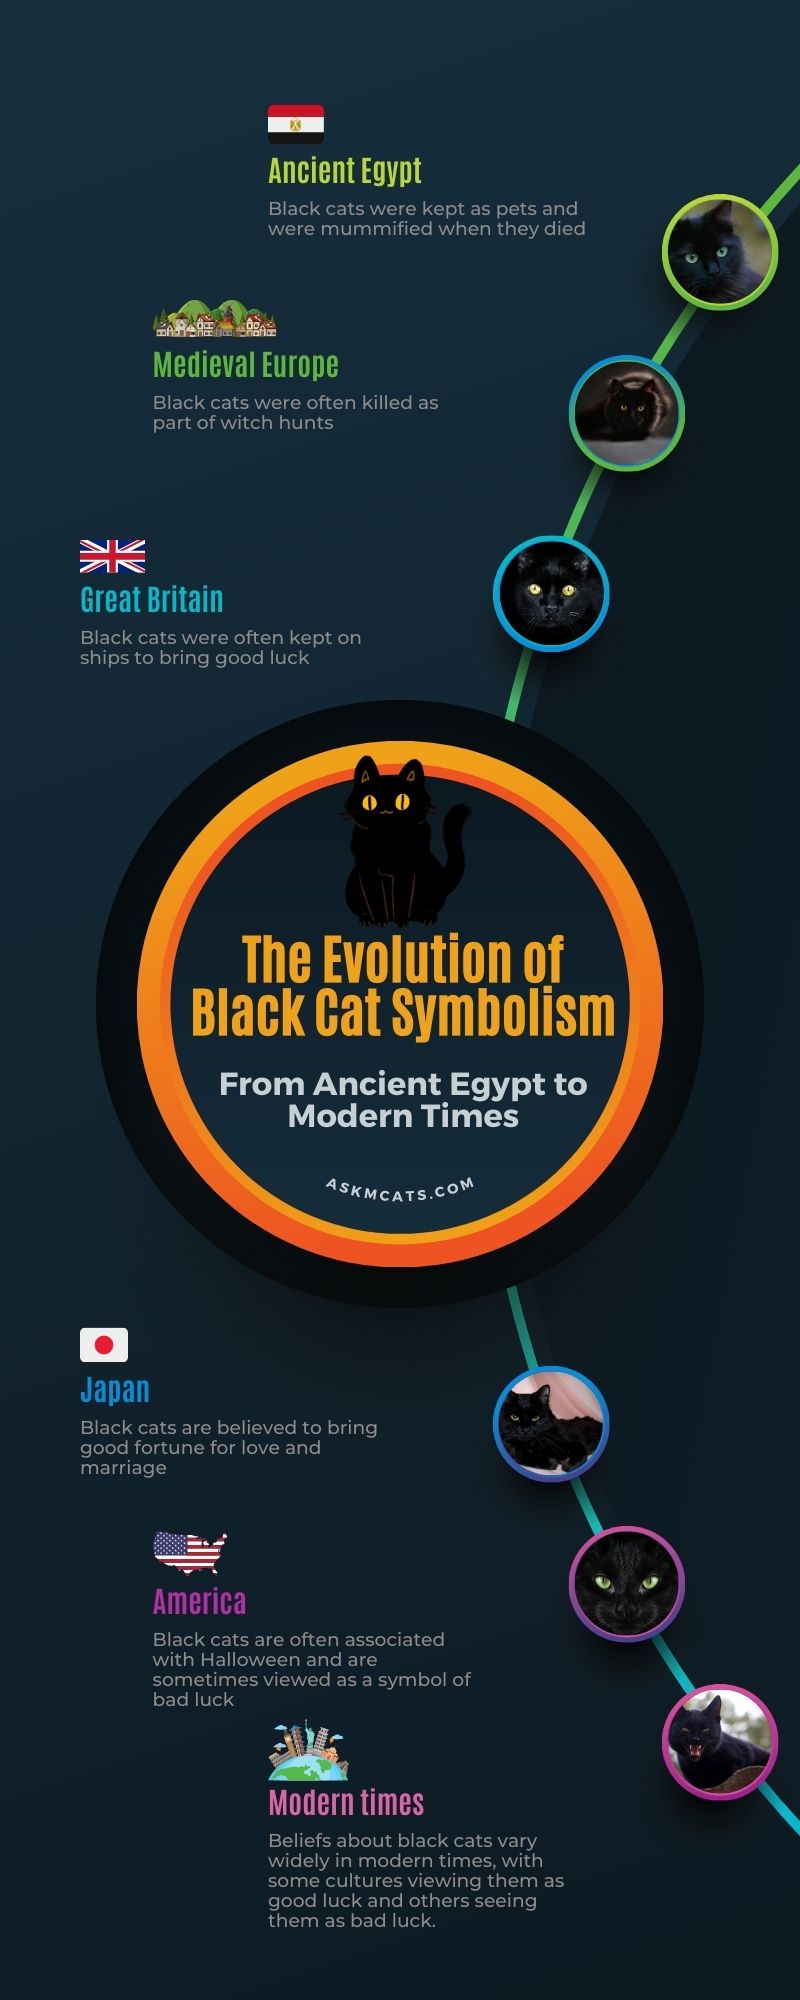 The Evolution of Black Cat Symbolism